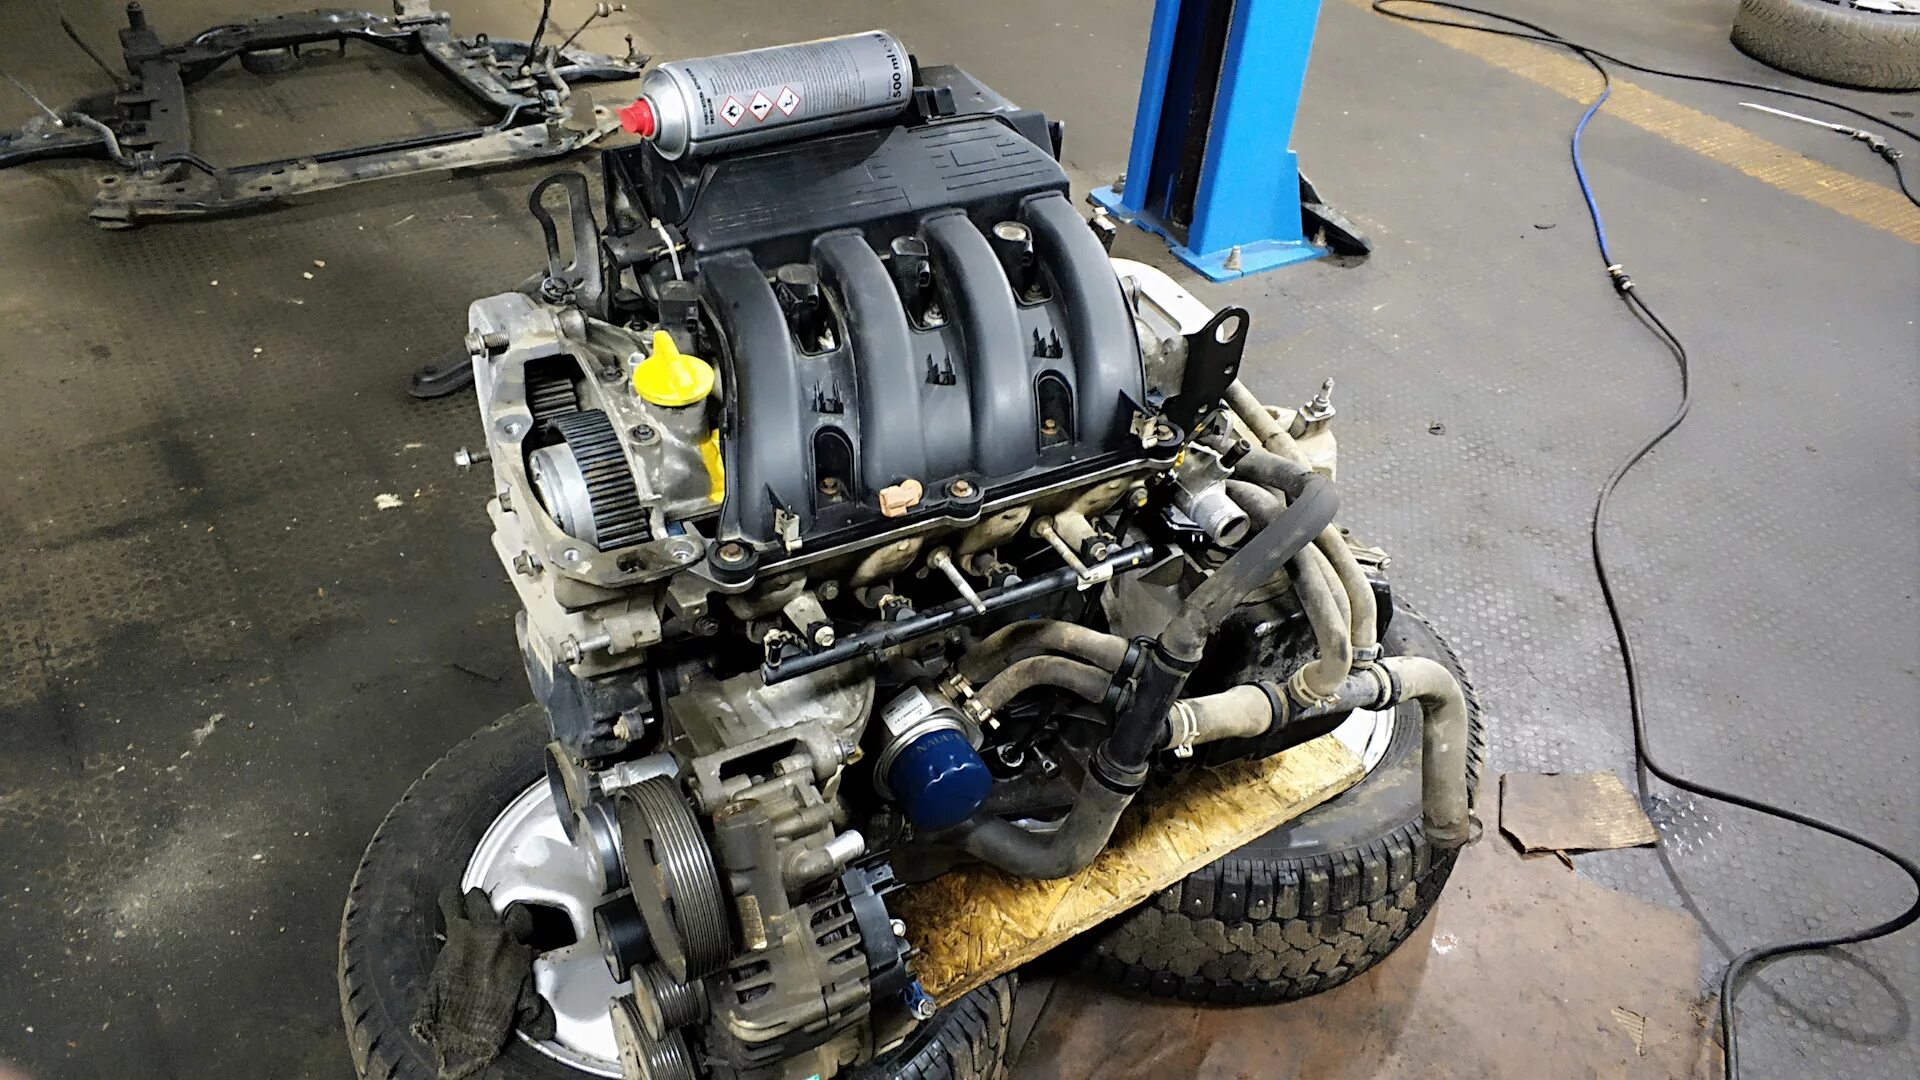 Рено Дастер 2.0 ДВС. Двигатель Рено f4r 2.0. Двигатель Renault Duster 2.0 f4r. Двигатель Рено Дастер 2.0 143. Двигатель дастер 2.0 143